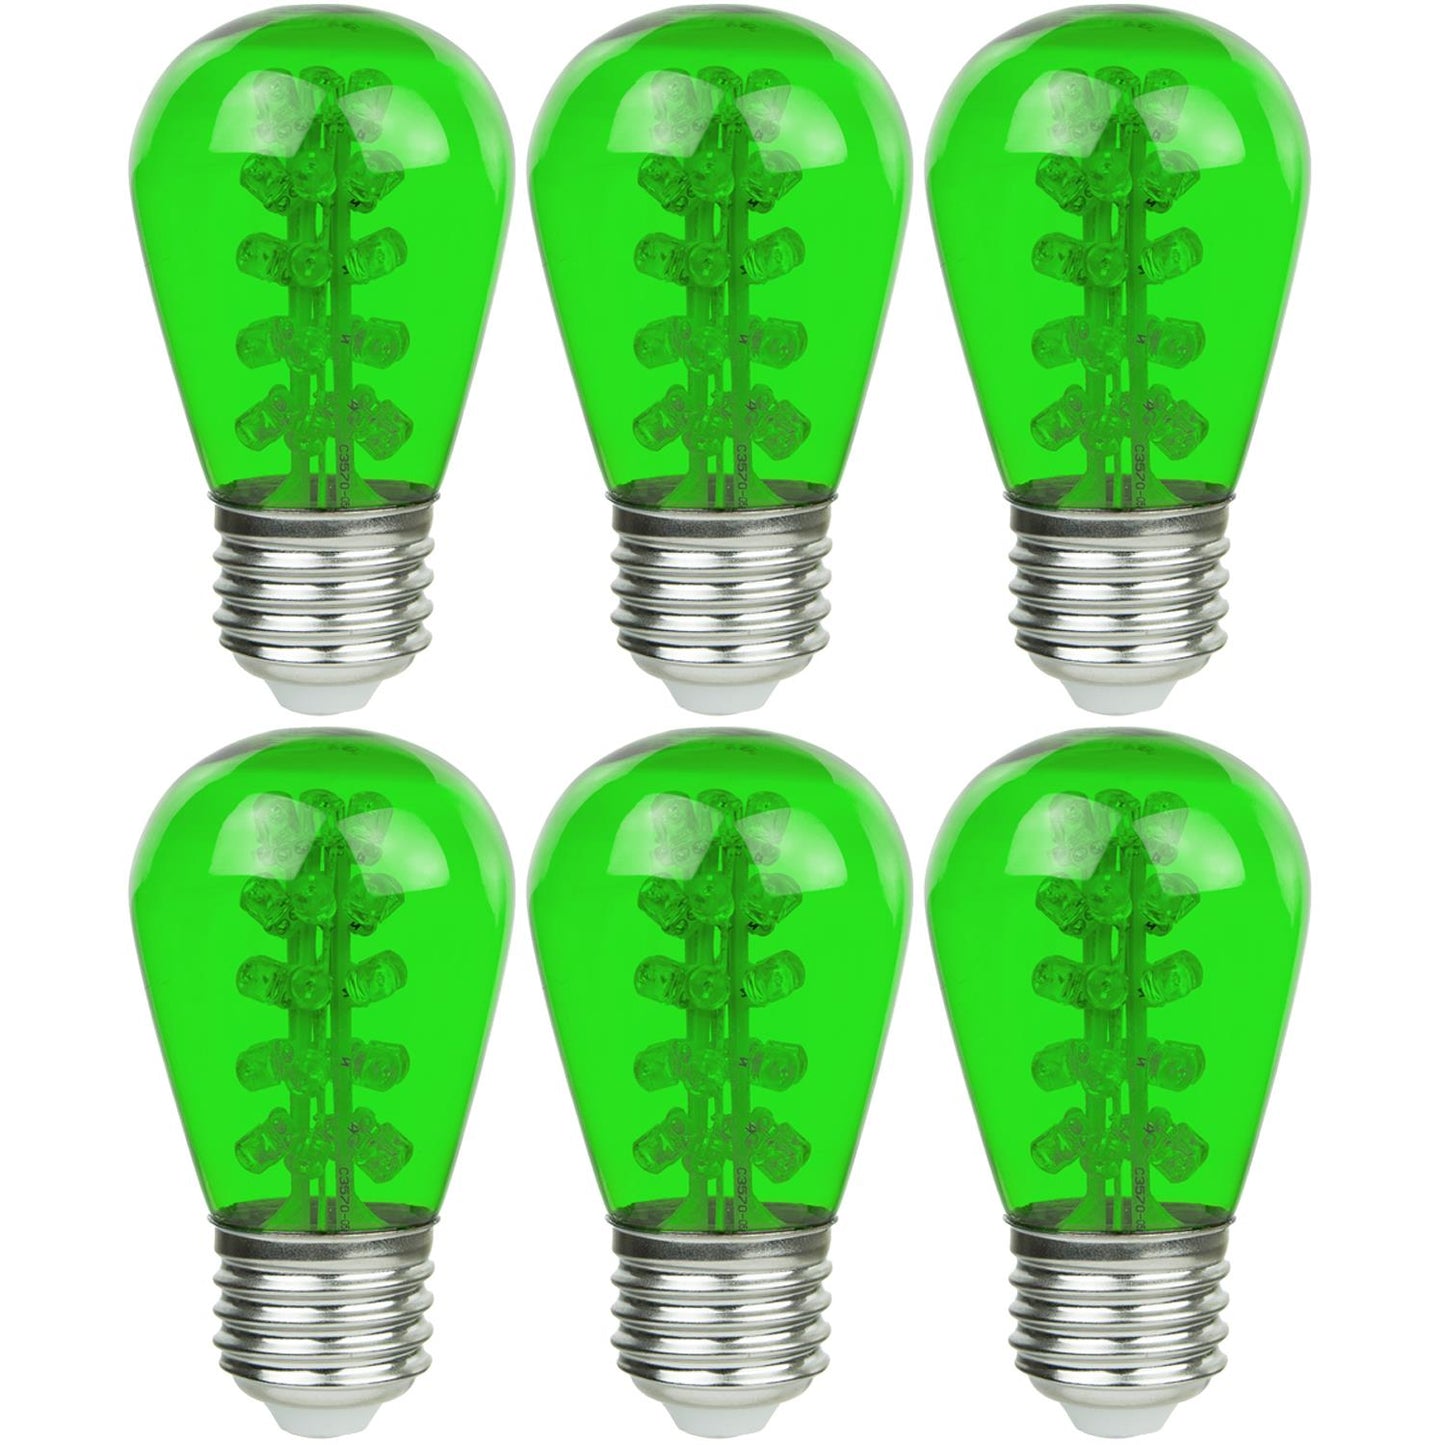 Sunlite LED S14 Colored Sign 0.9W (10W Equivalent) Bulb Medium (E26) Base, Green